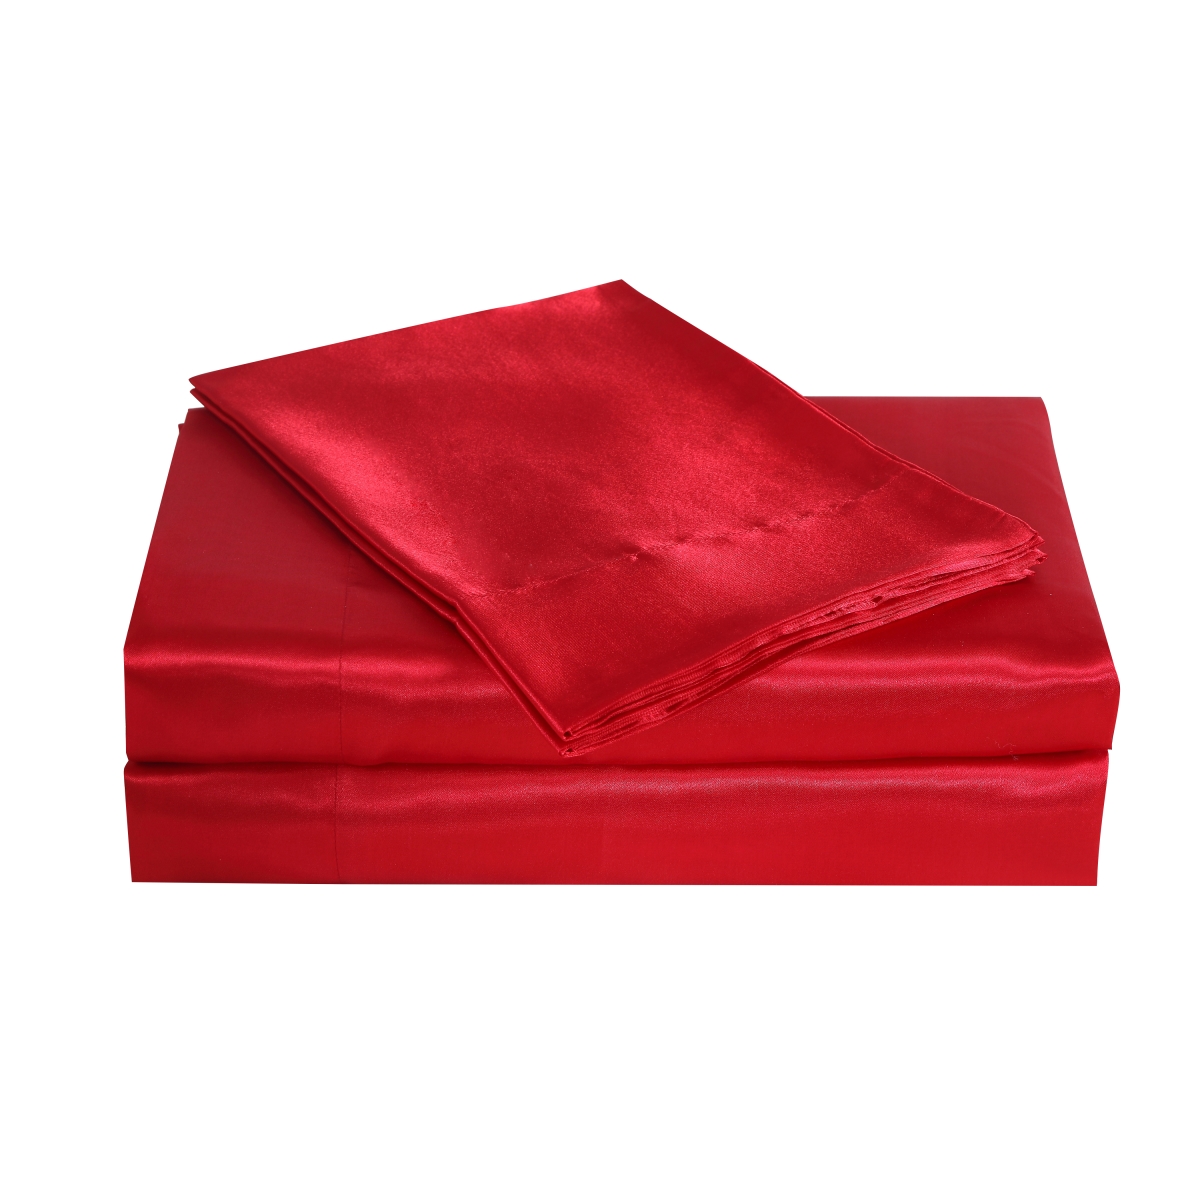 Bella & Whistles Lev652xxredx02 Satin Charmeuse Sheet Set Red - Full